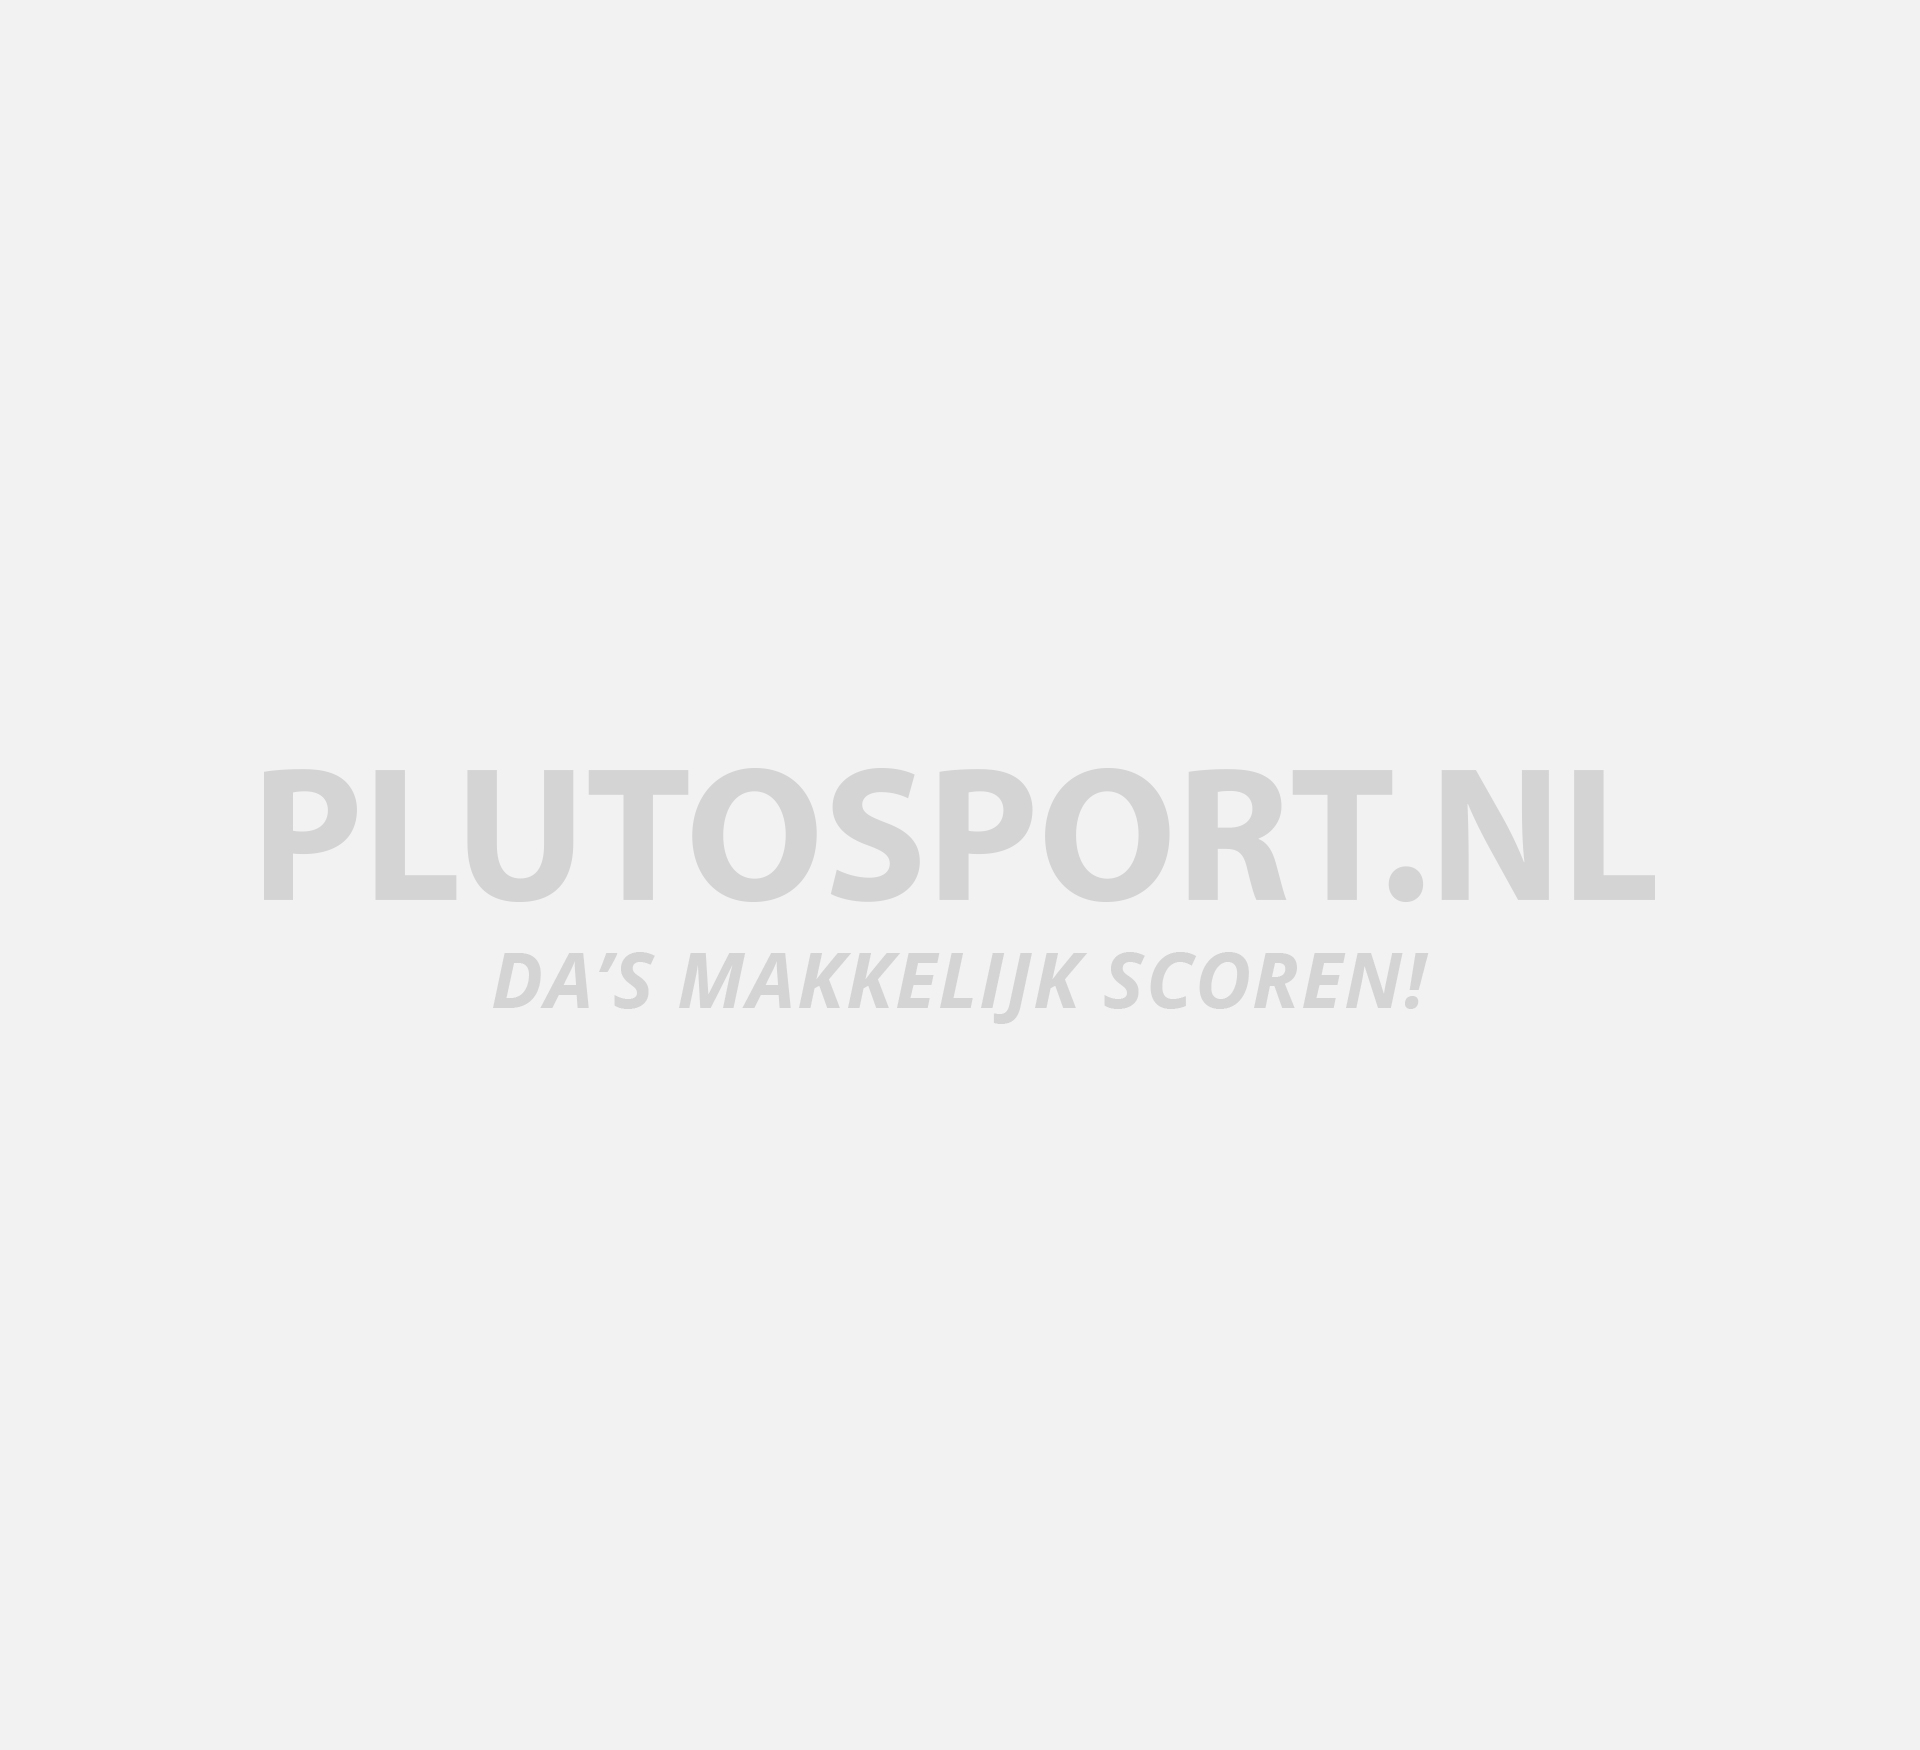 Kalmerend diameter tand Puma sneakers, kleding en accessoires scoor je bij Plutosport.nl |  Plutosport